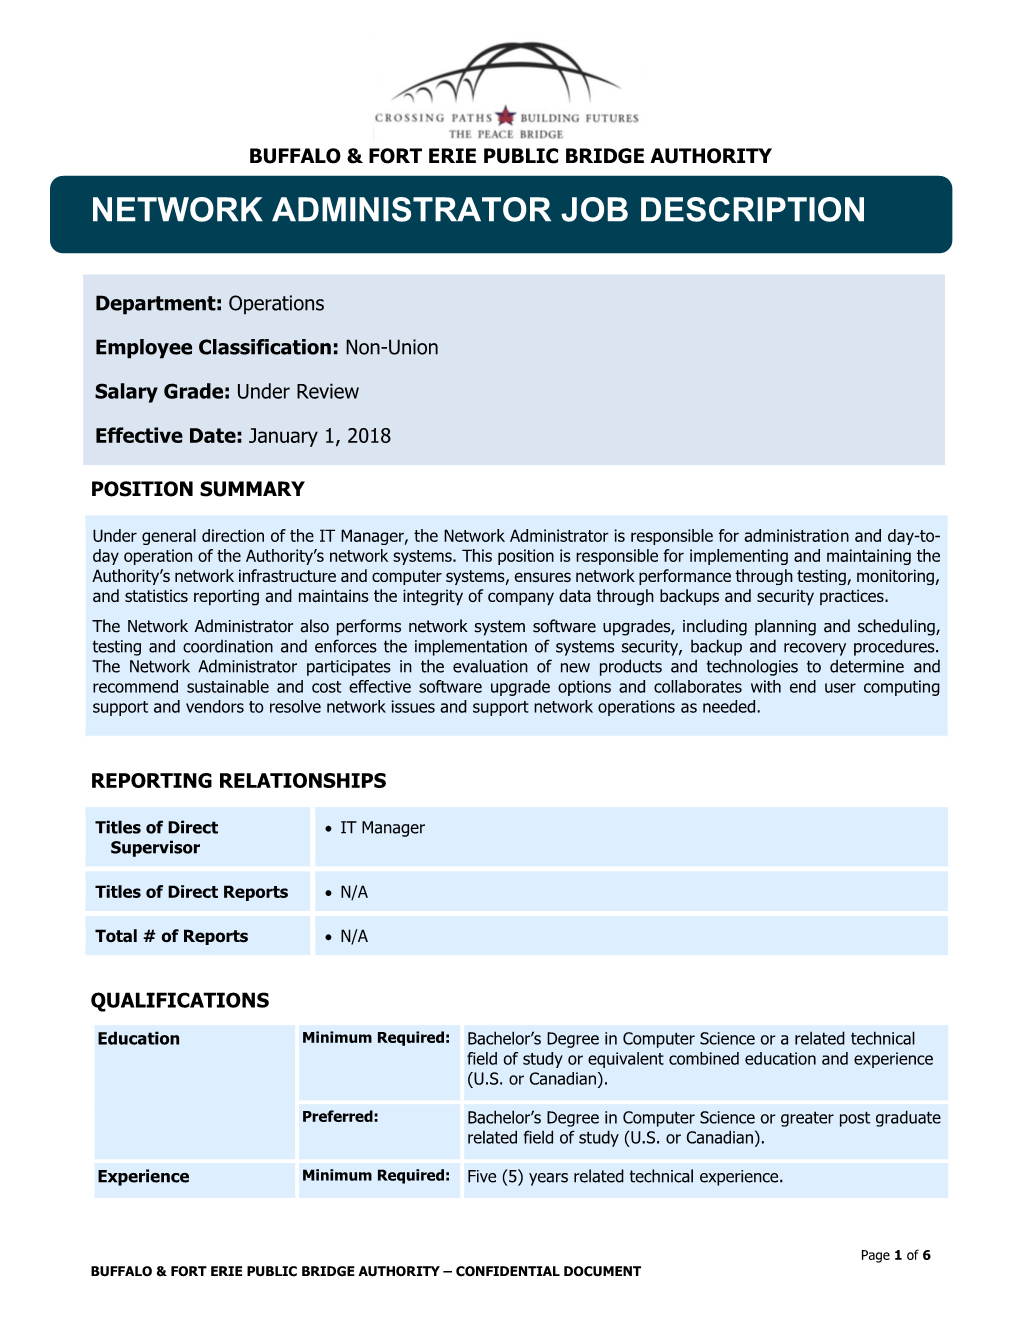 Network Administrator Job Description